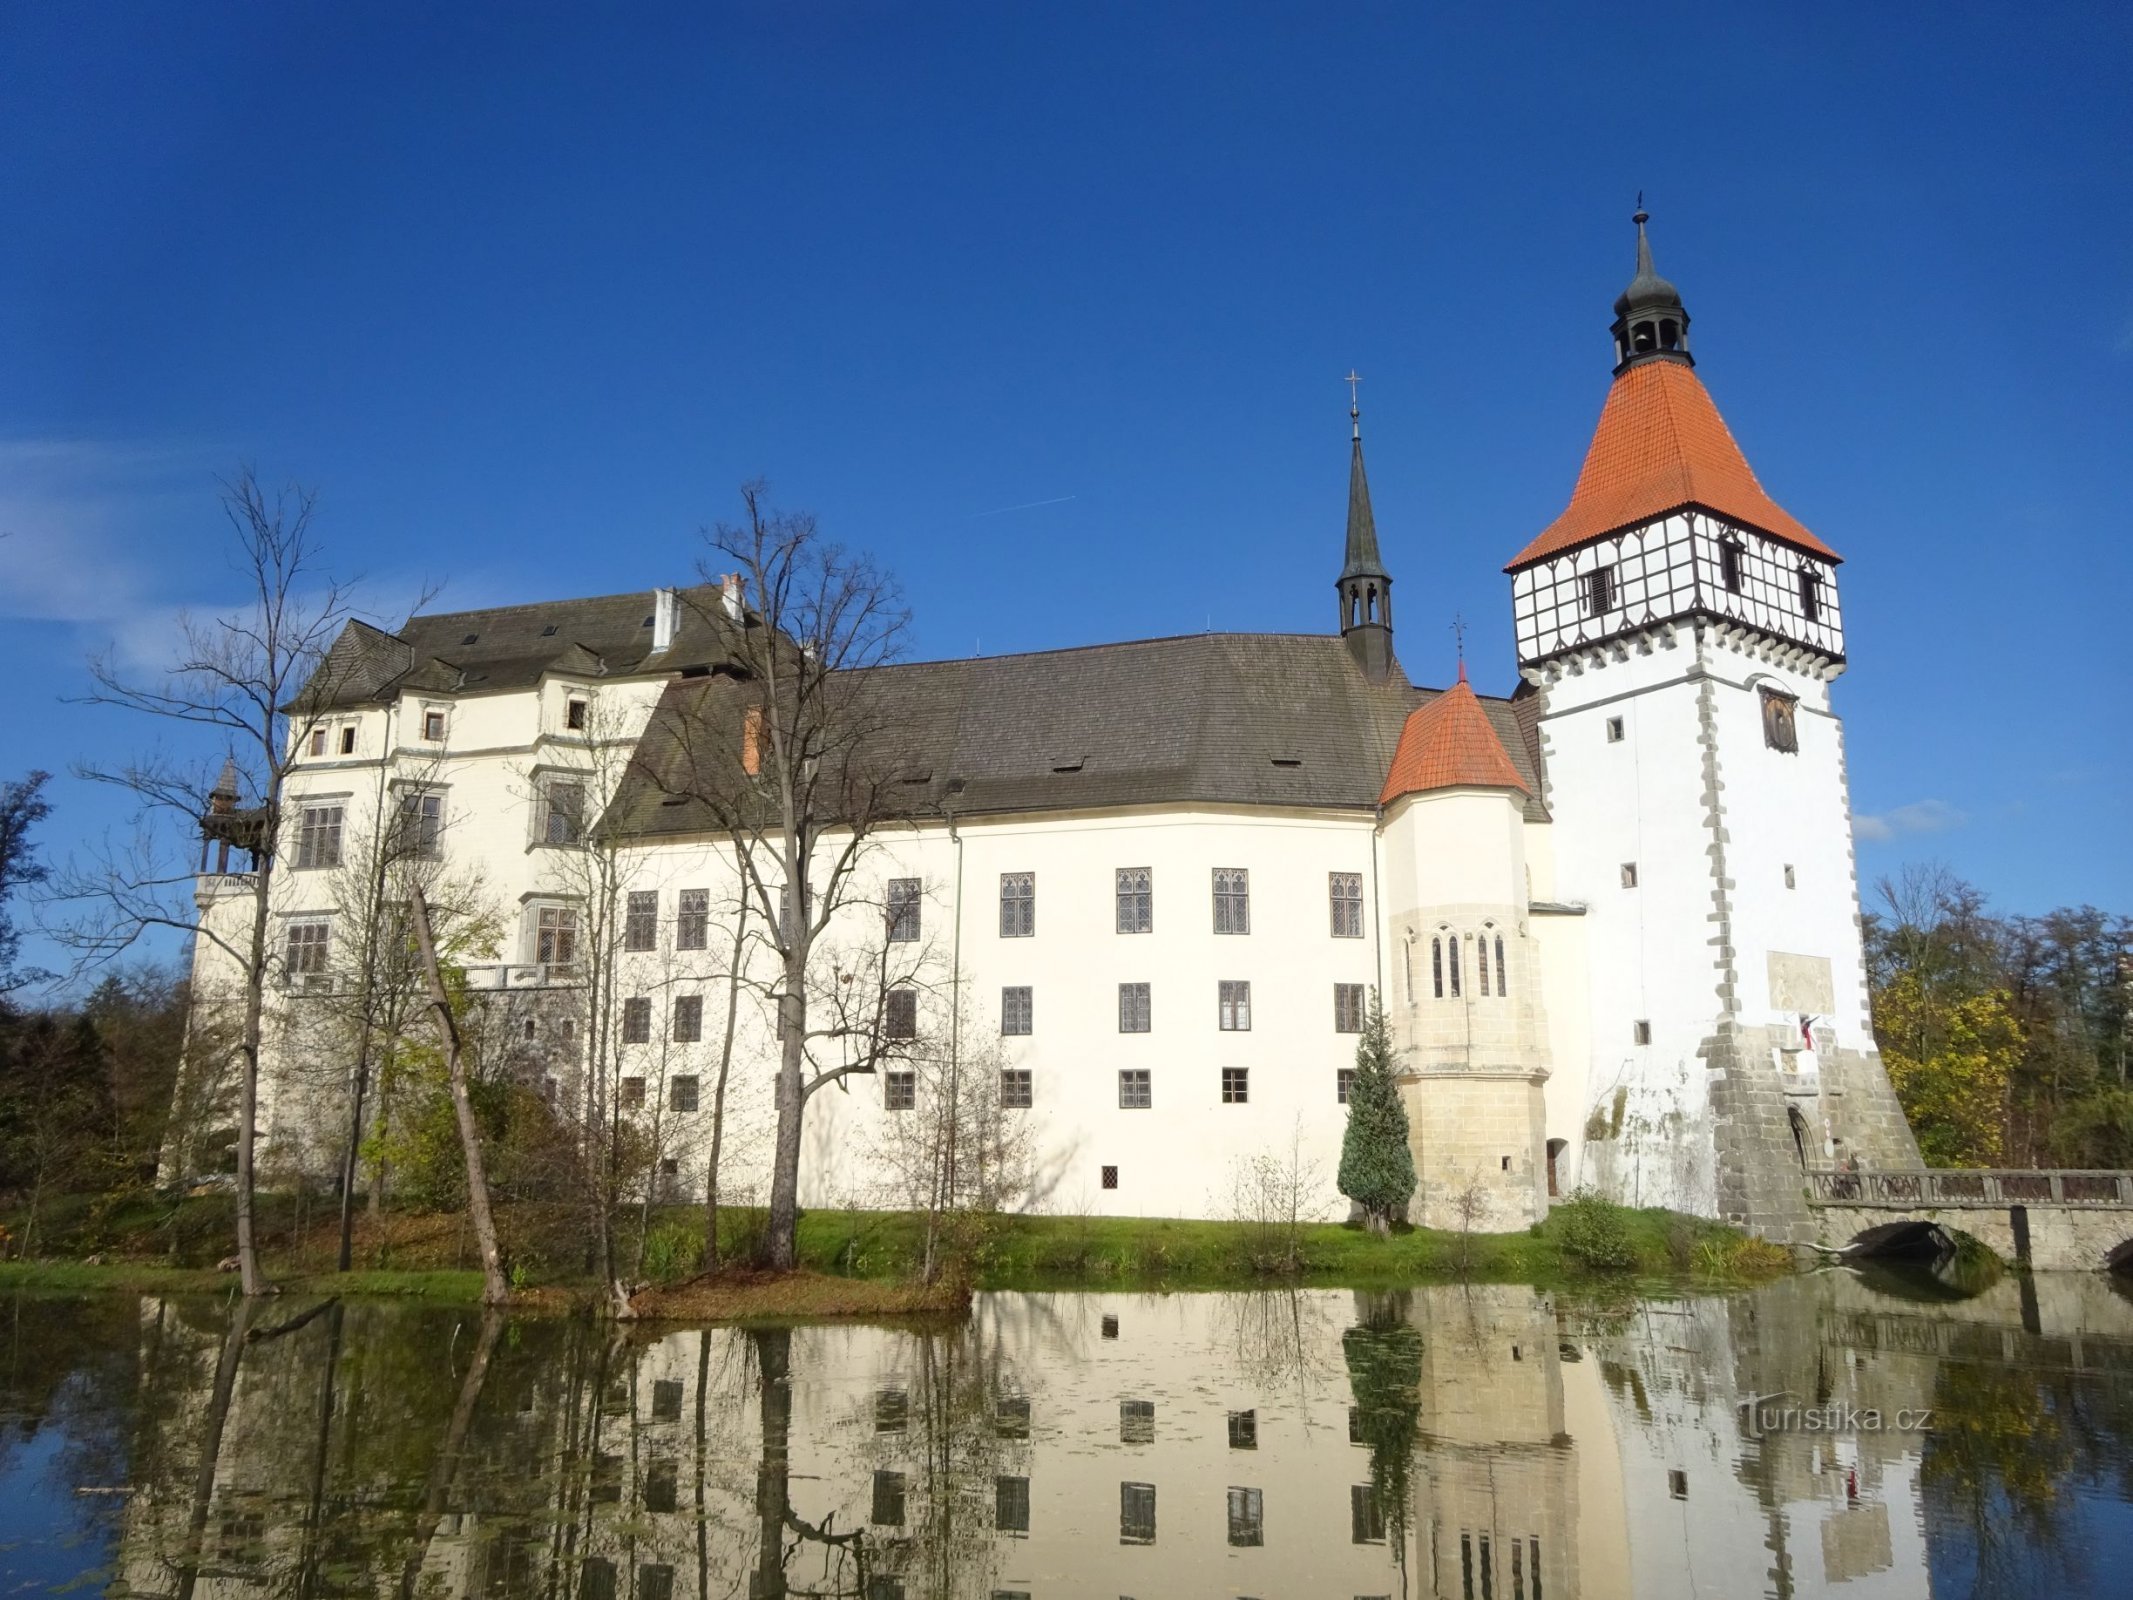 Blatná - castello, parco del castello, maggese e betulle